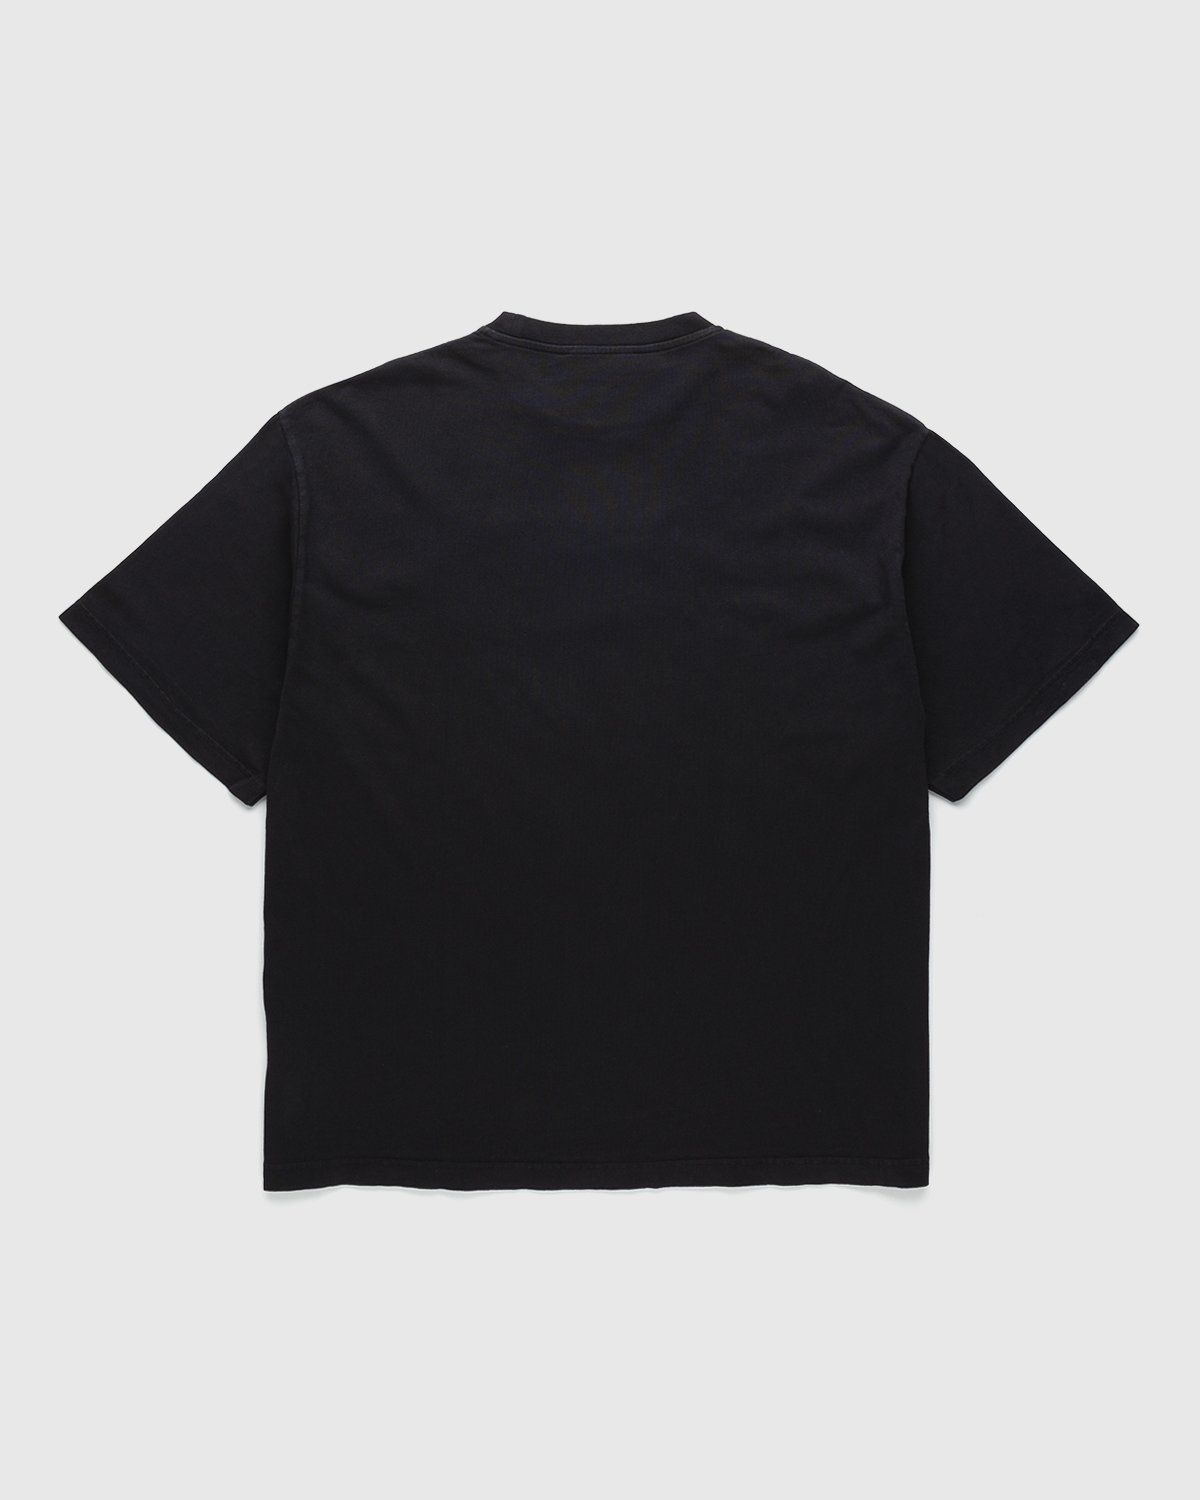 Acne Studios – Cotton Logo T-Shirt Black - Image 2